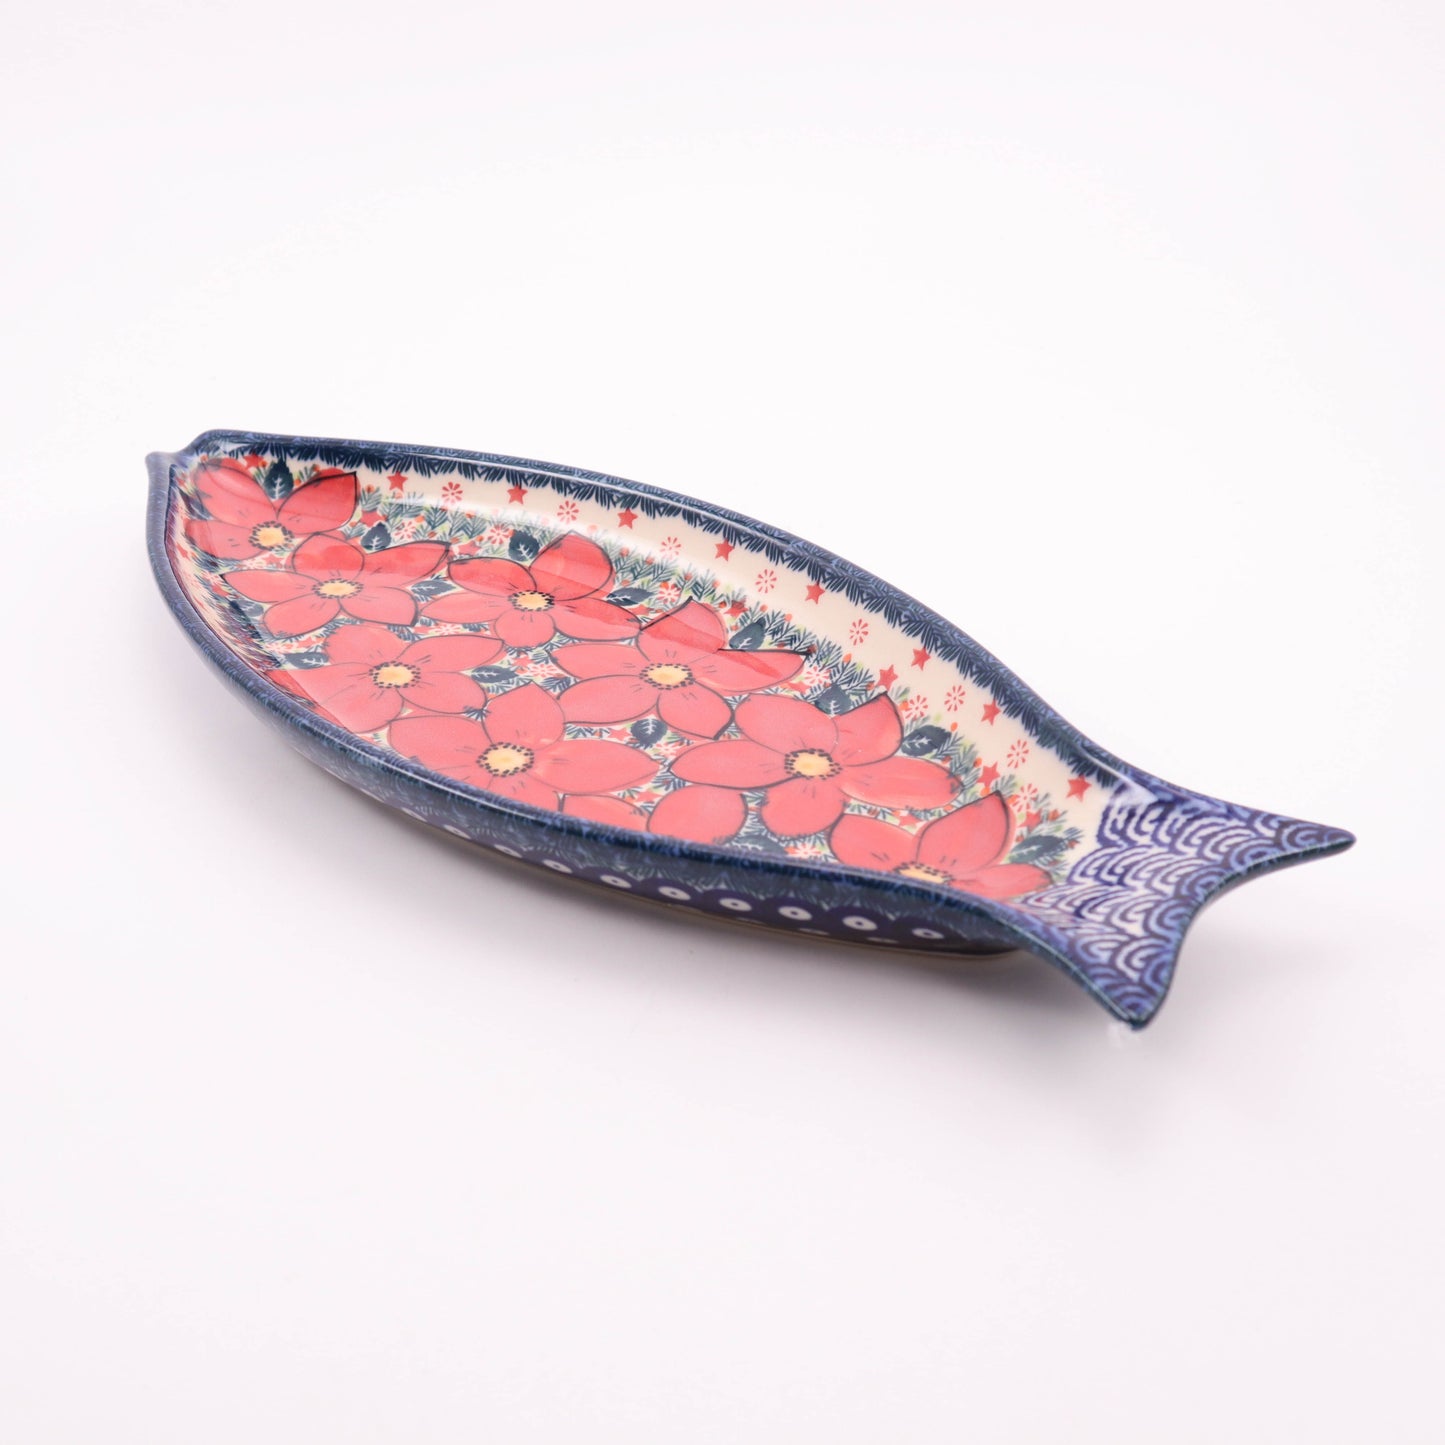 15"x7" Fish Platter. Pattern: Poinsettia